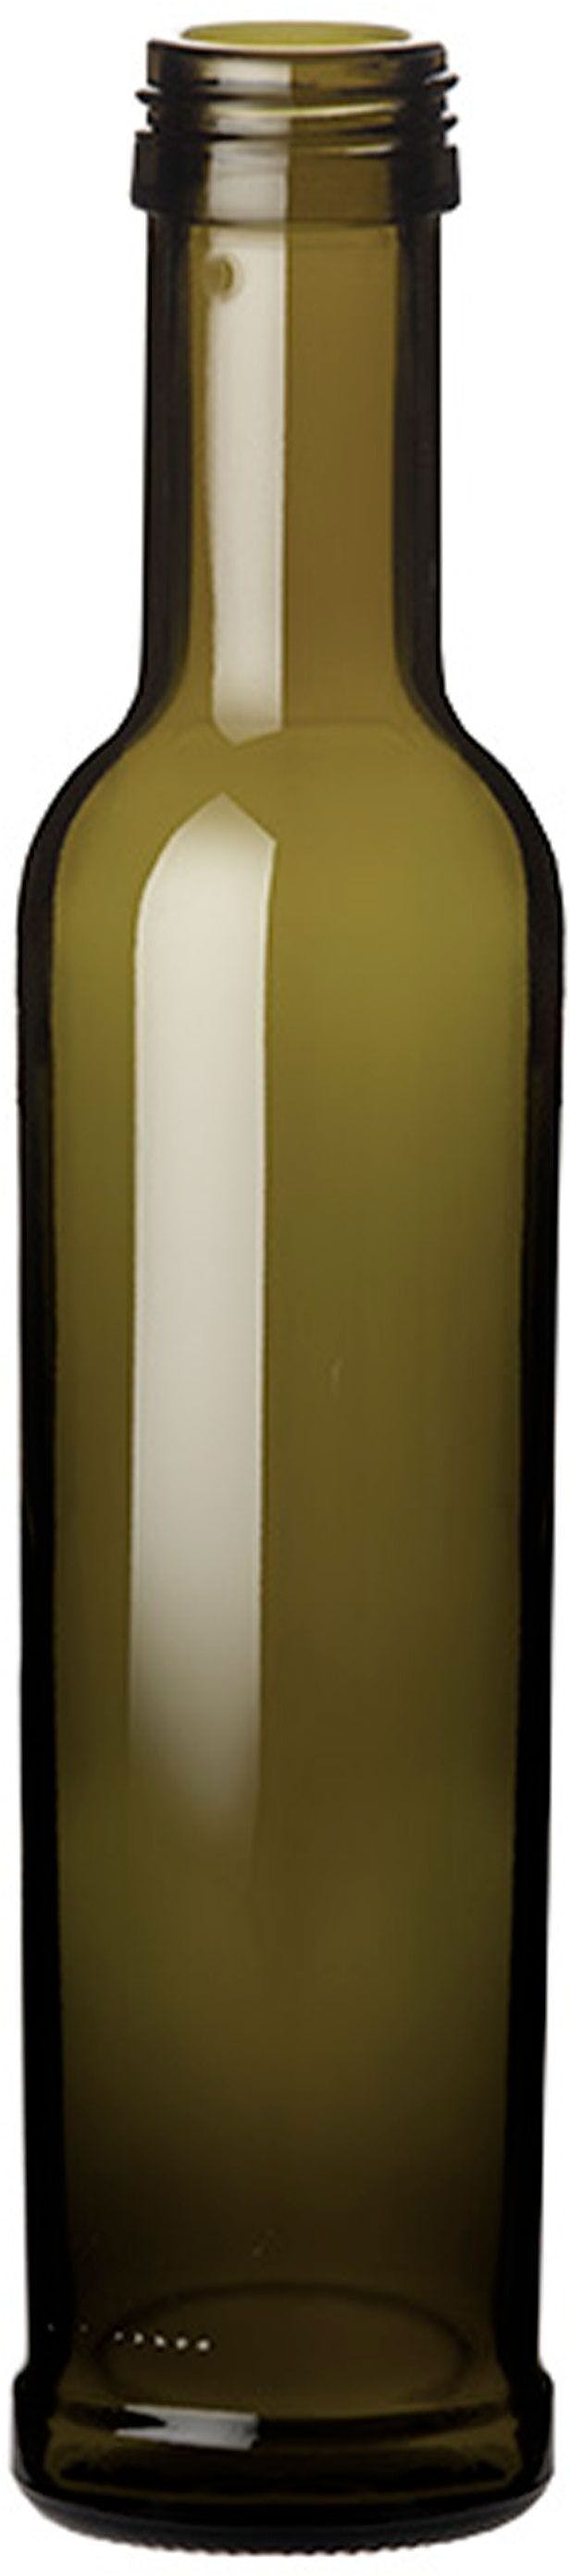 Bottle BORDO ECO 250 P 31,5 UVAG